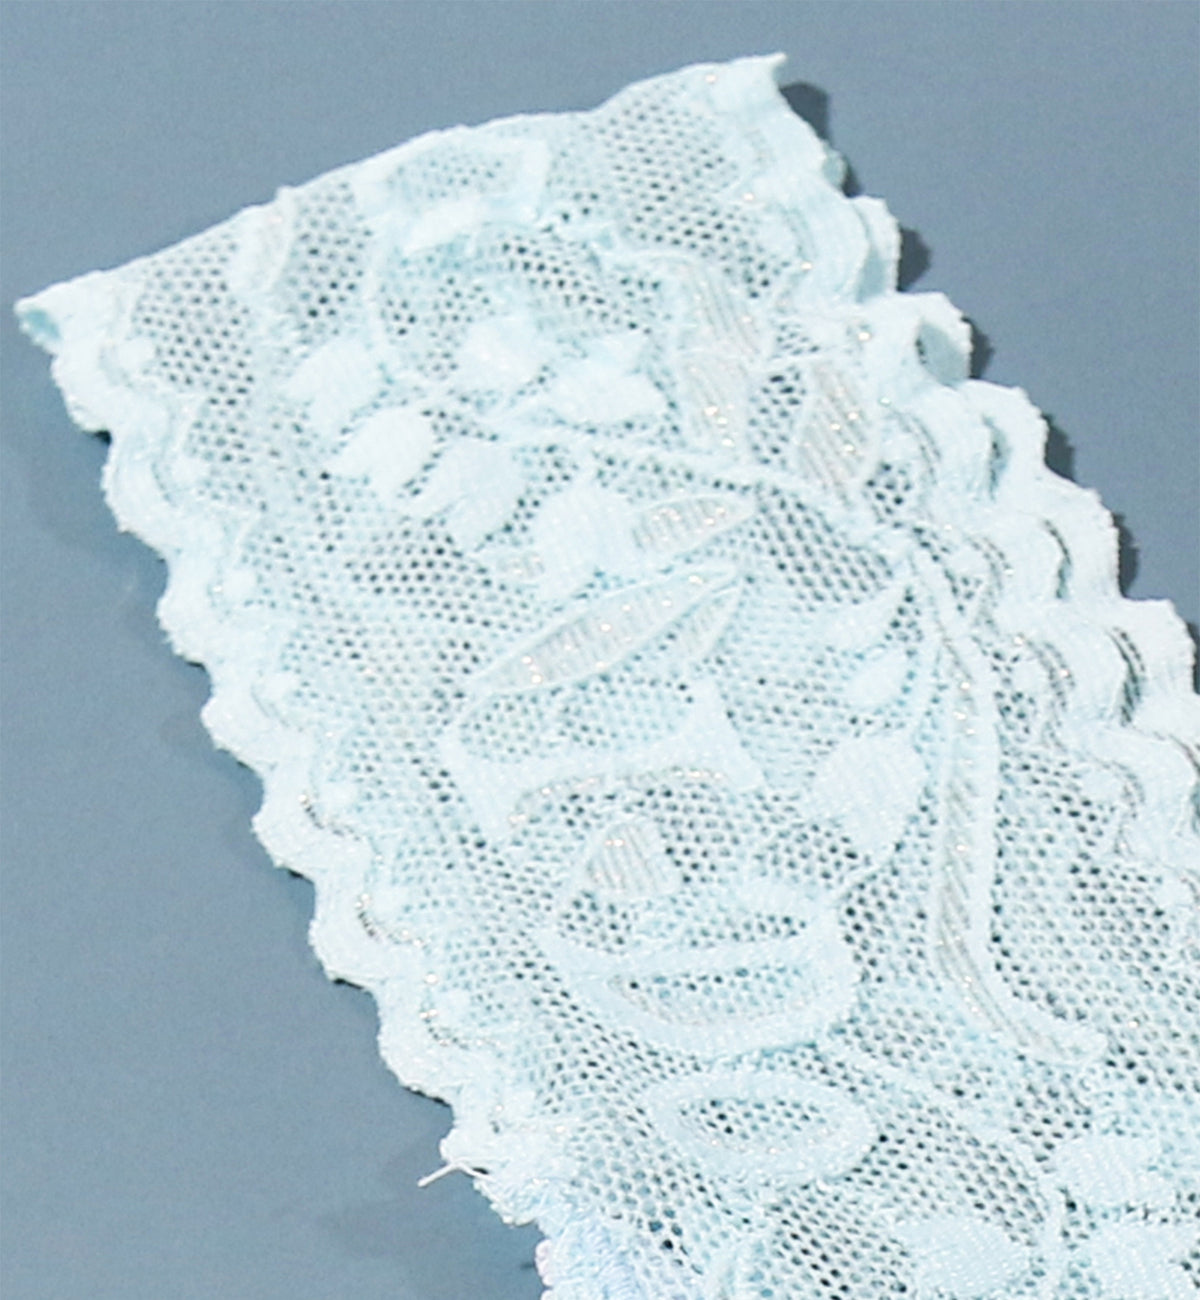 Hanky Panky Bridal I DO Shimmer Lace Original Rise Thong (151181),Powder Blue - Powder Blue,One Size